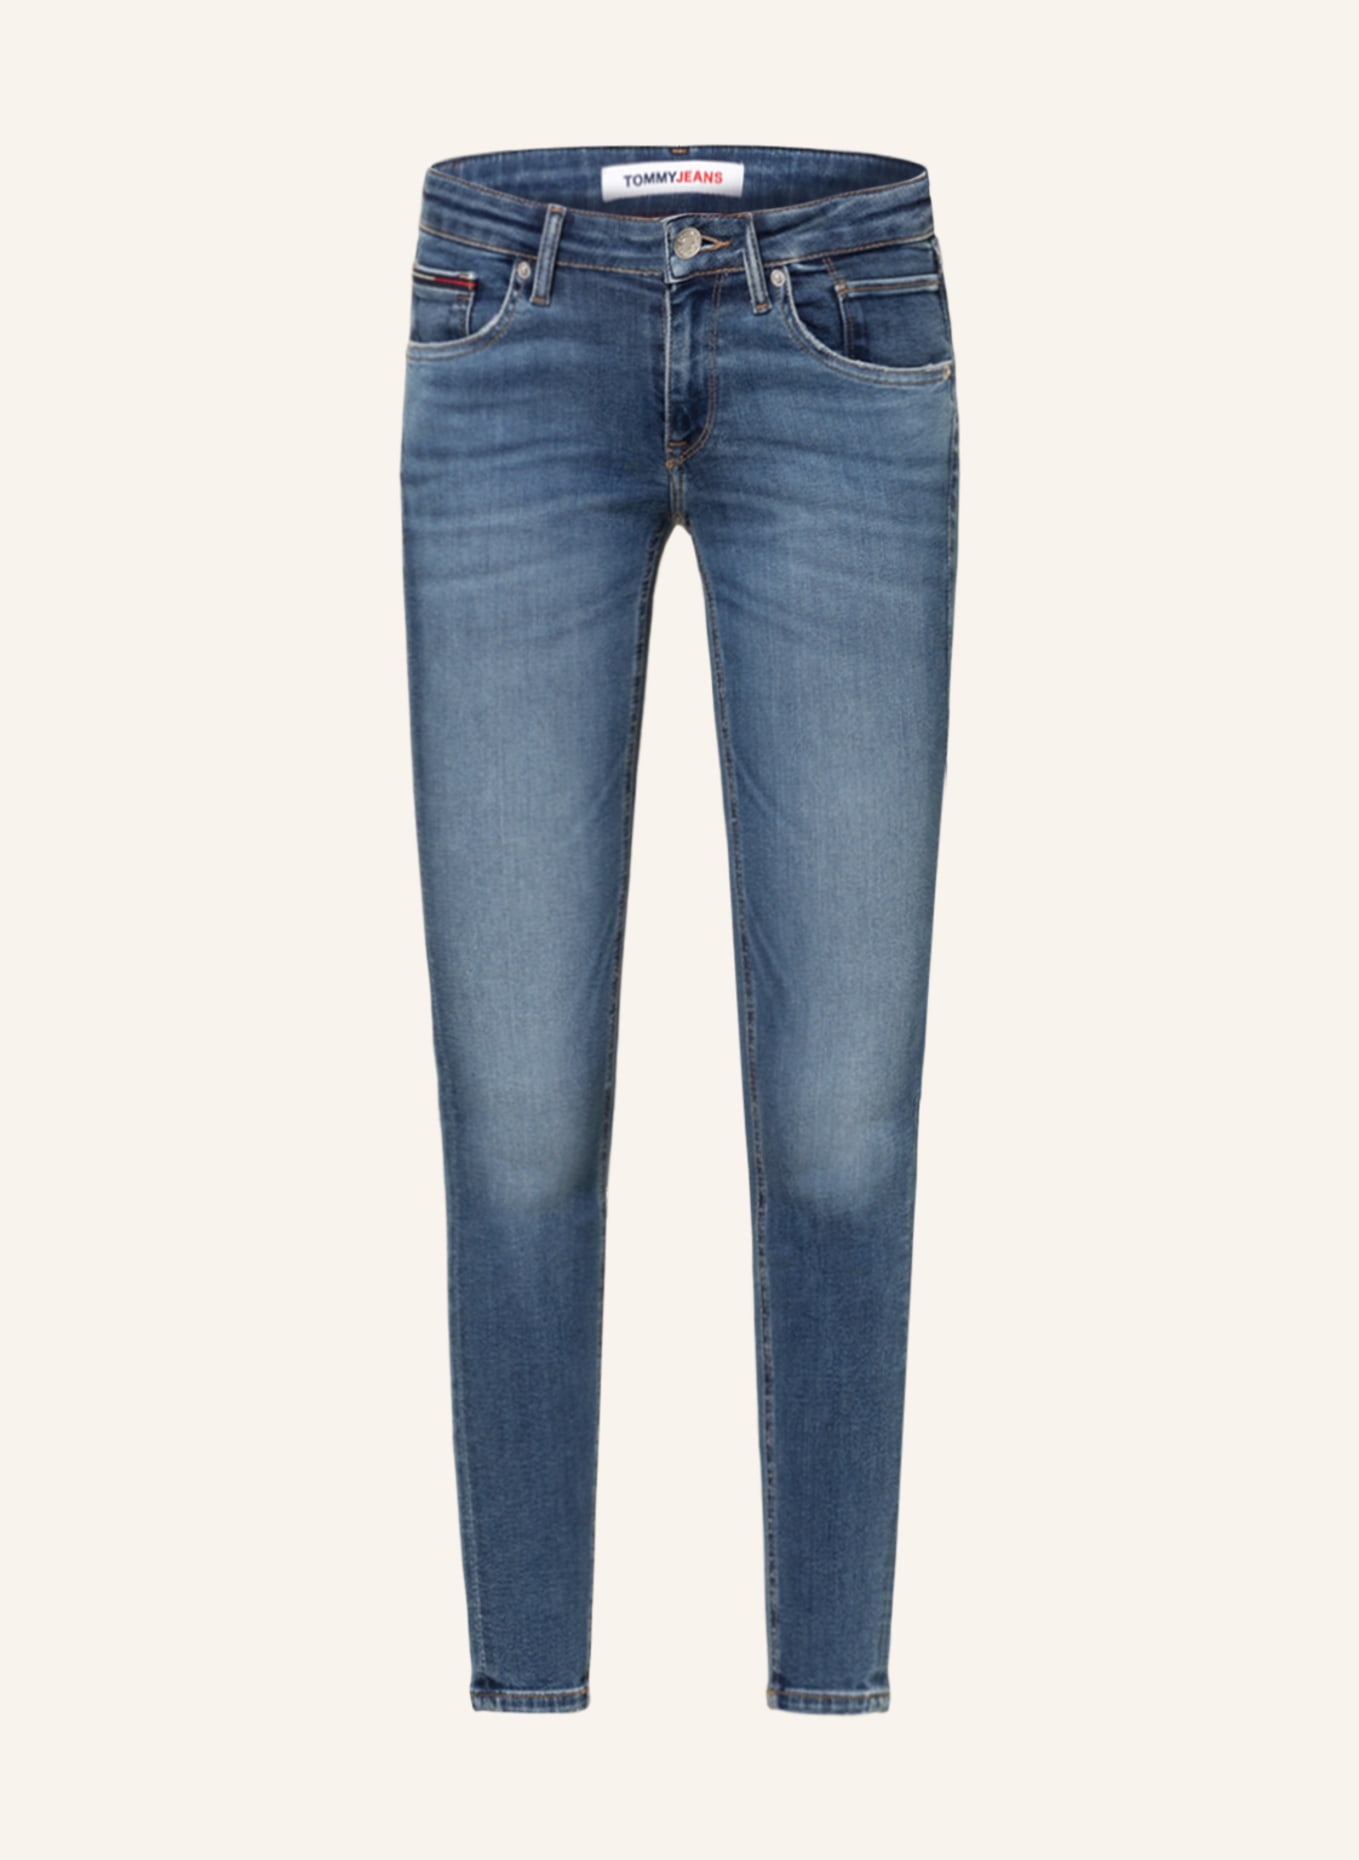 TOMMY JEANS Skinny Jeans SCARLETT, Farbe: 1A5 Arden Mb Str (Bild 1)